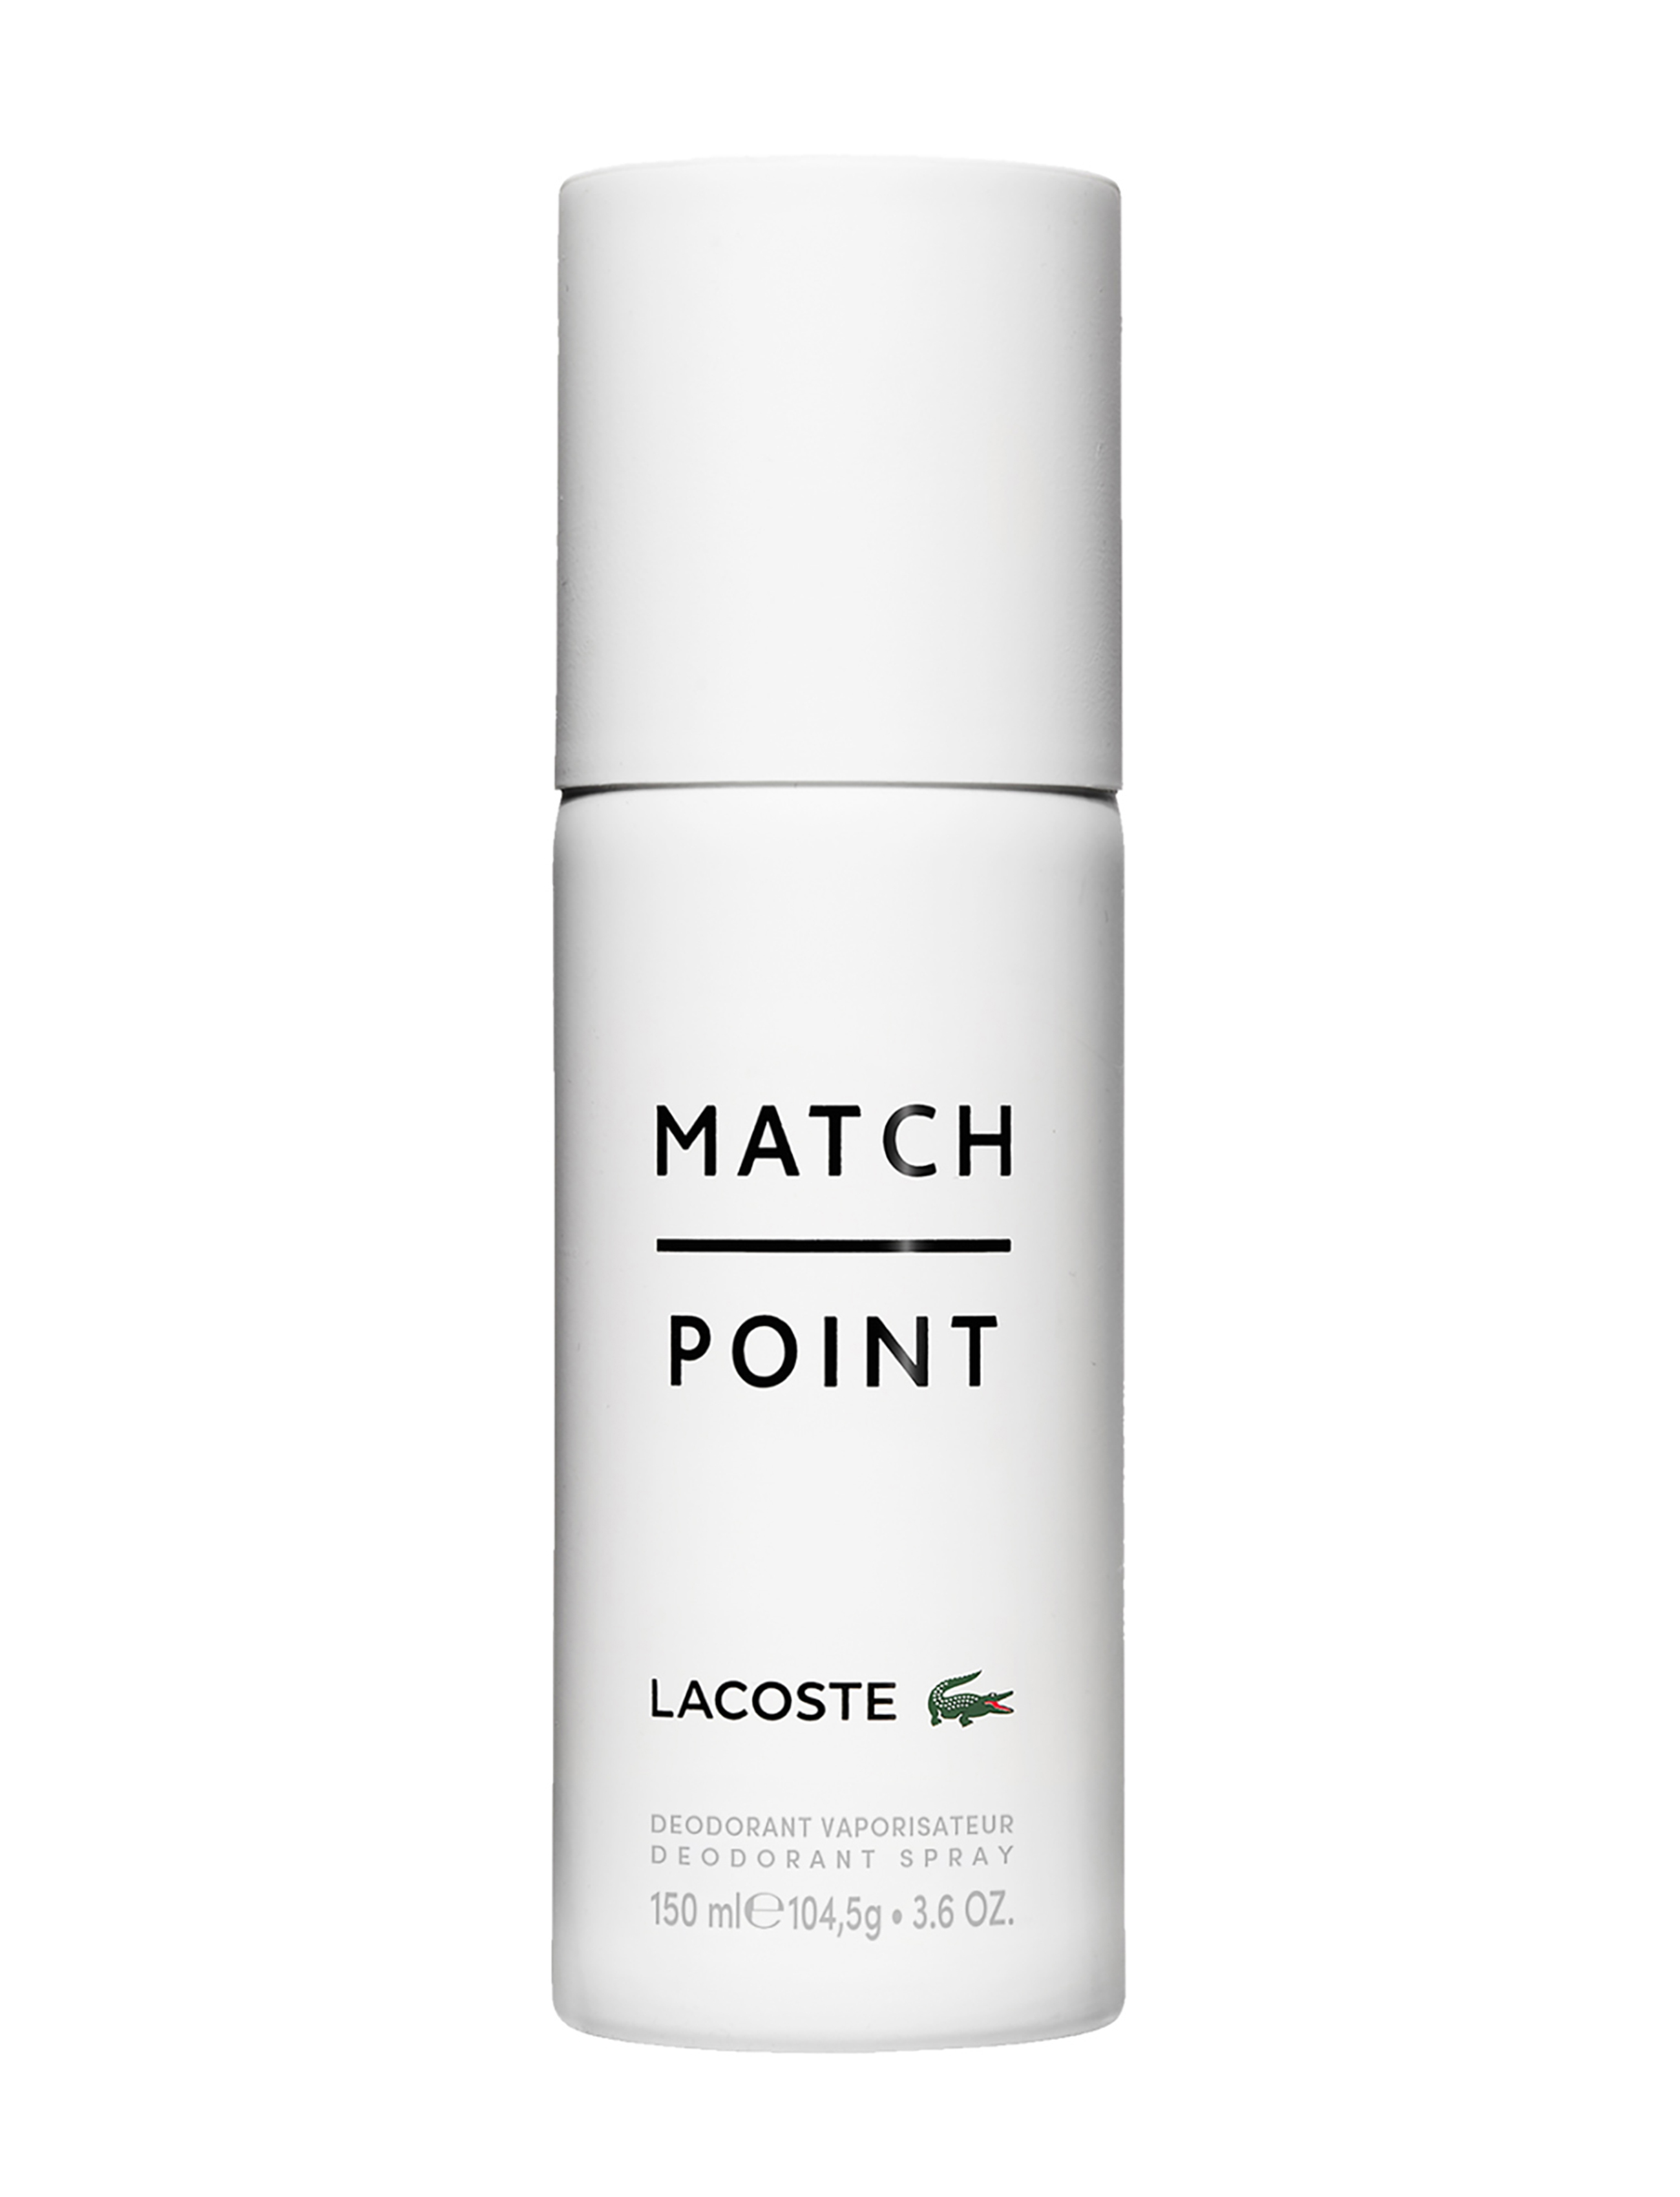  Match Point Deodorant Spray, 150 ml